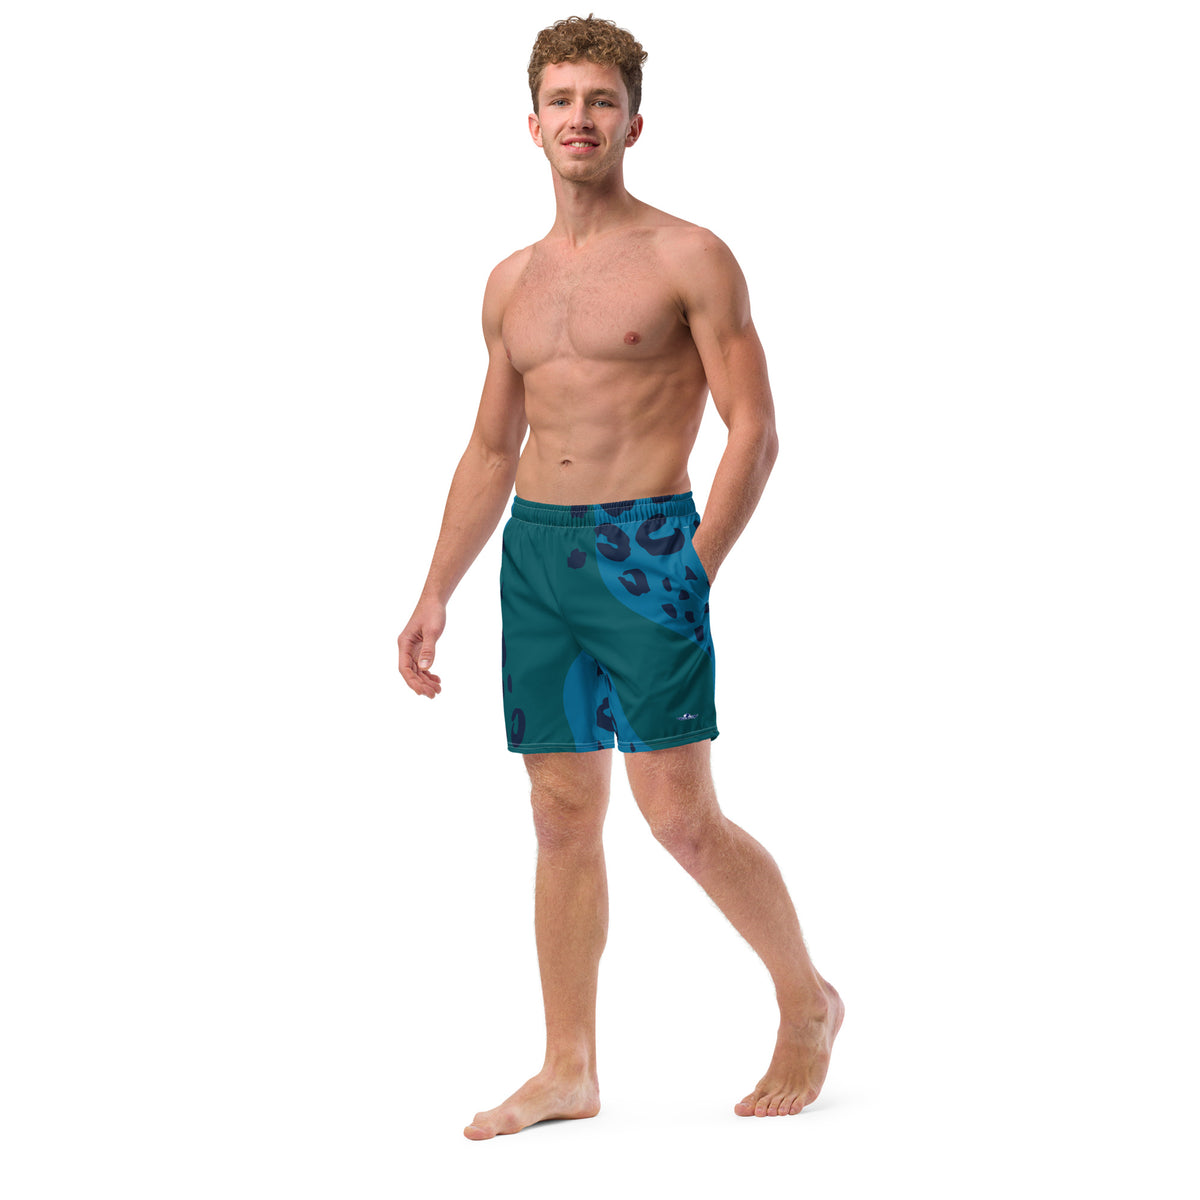 Aquatic Abstract Men's Swim Trunks